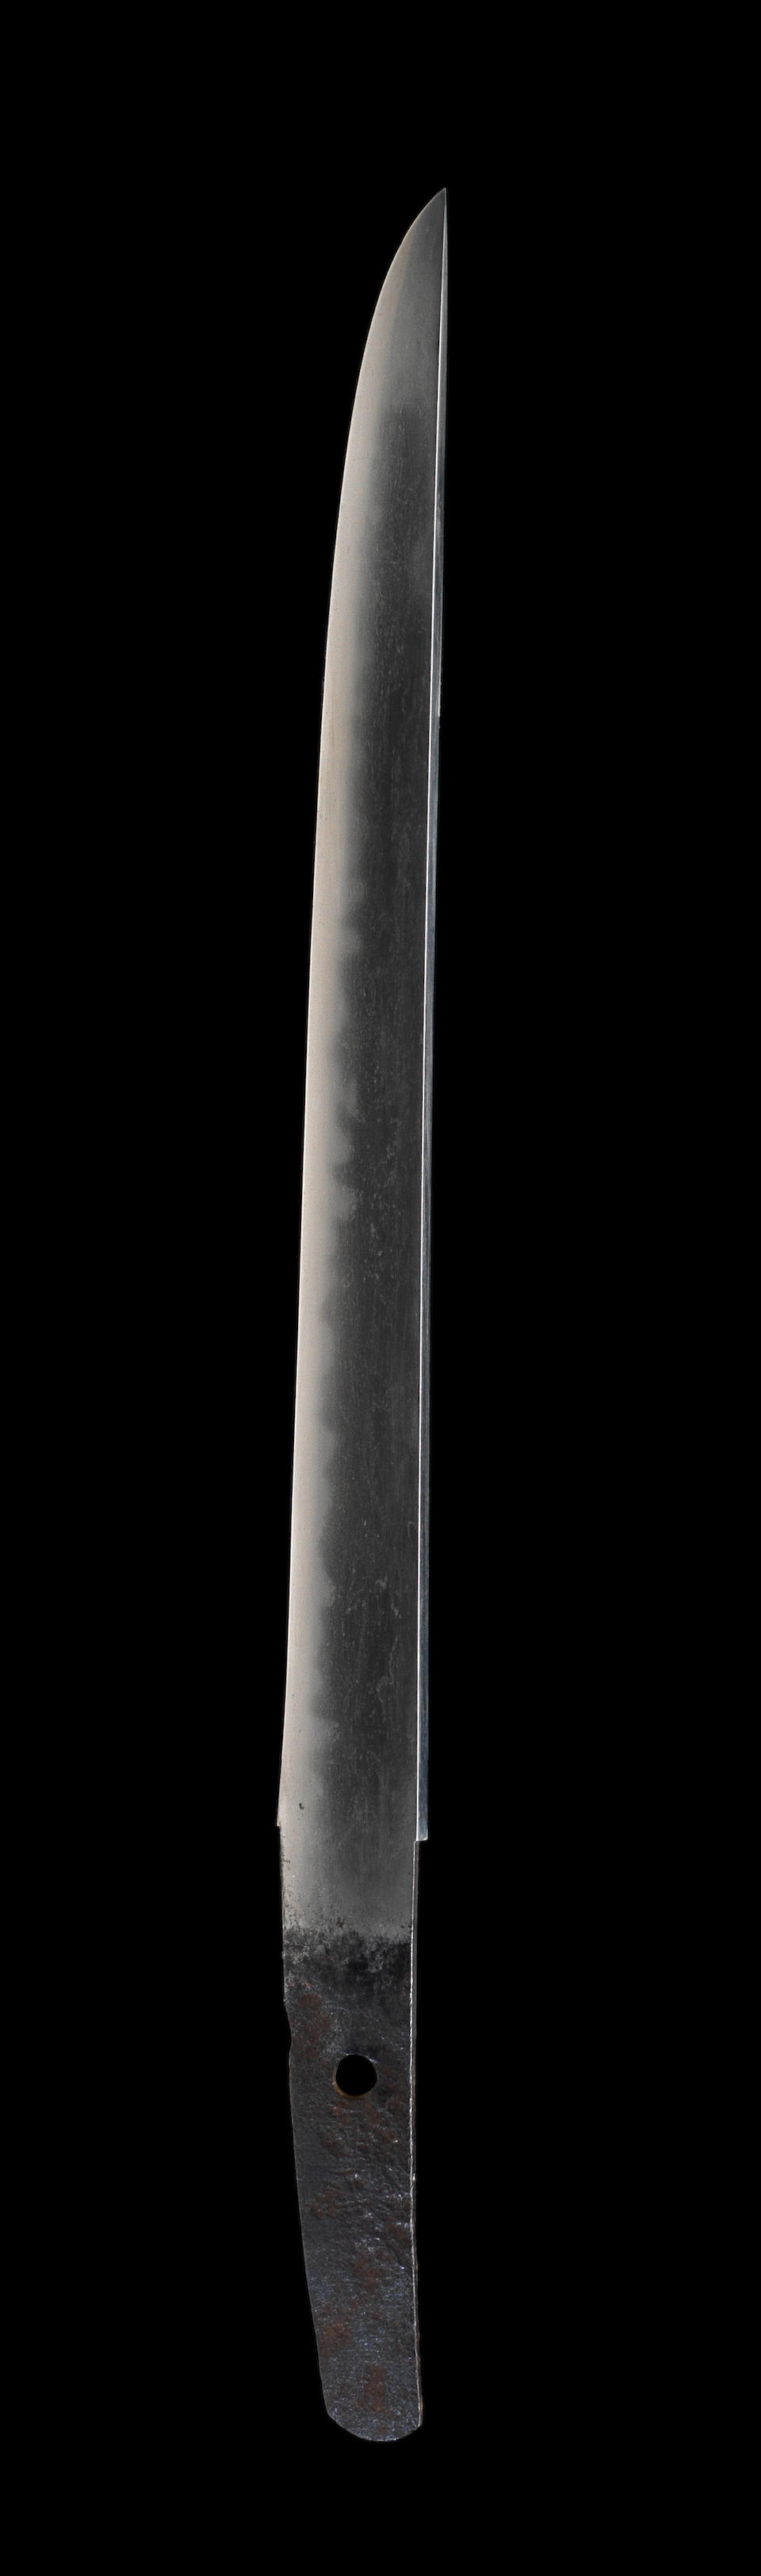 A ko-tanto The blade 15th century, the mounts 19th century